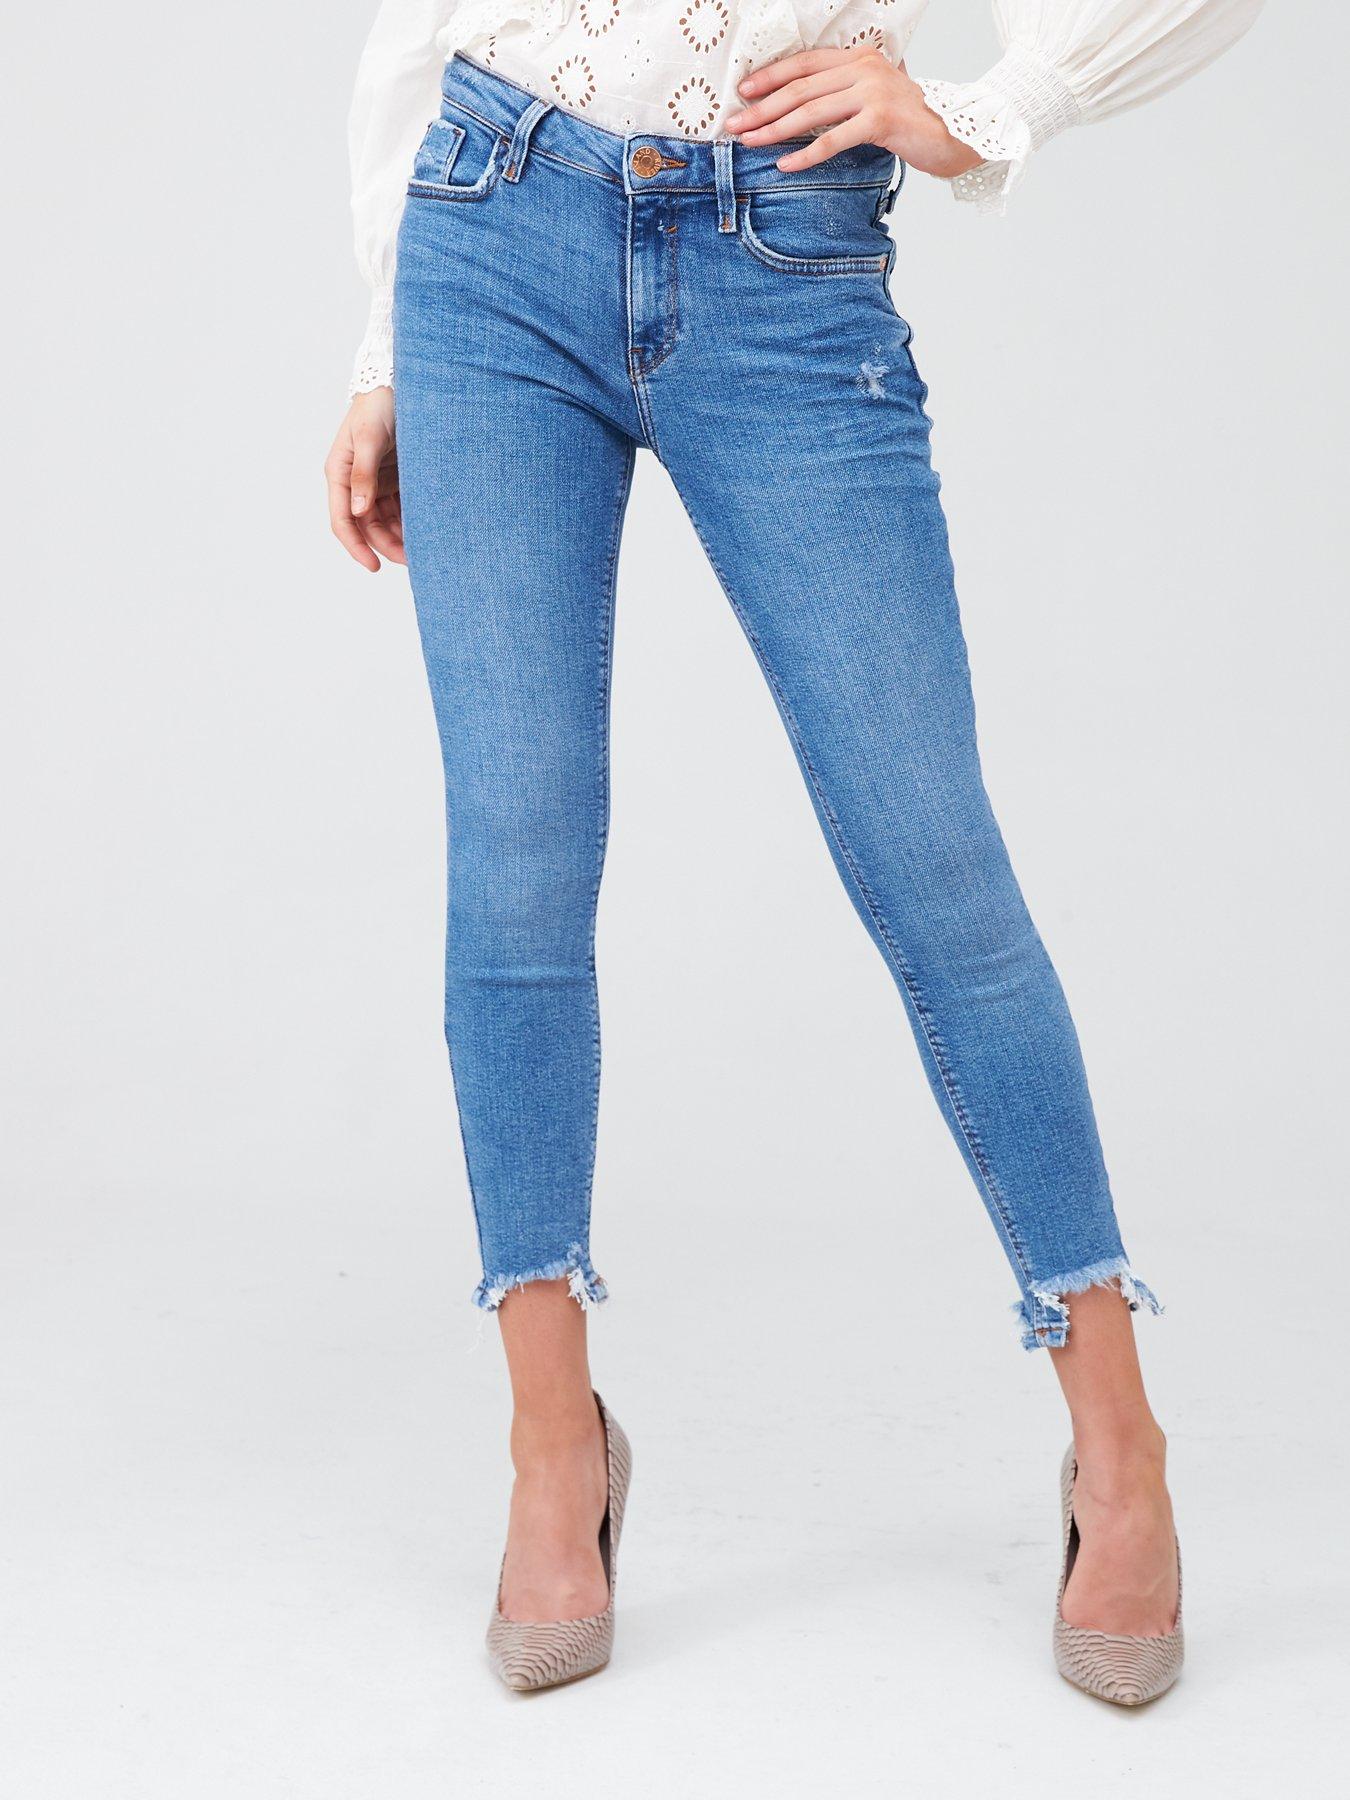 amelie jeans